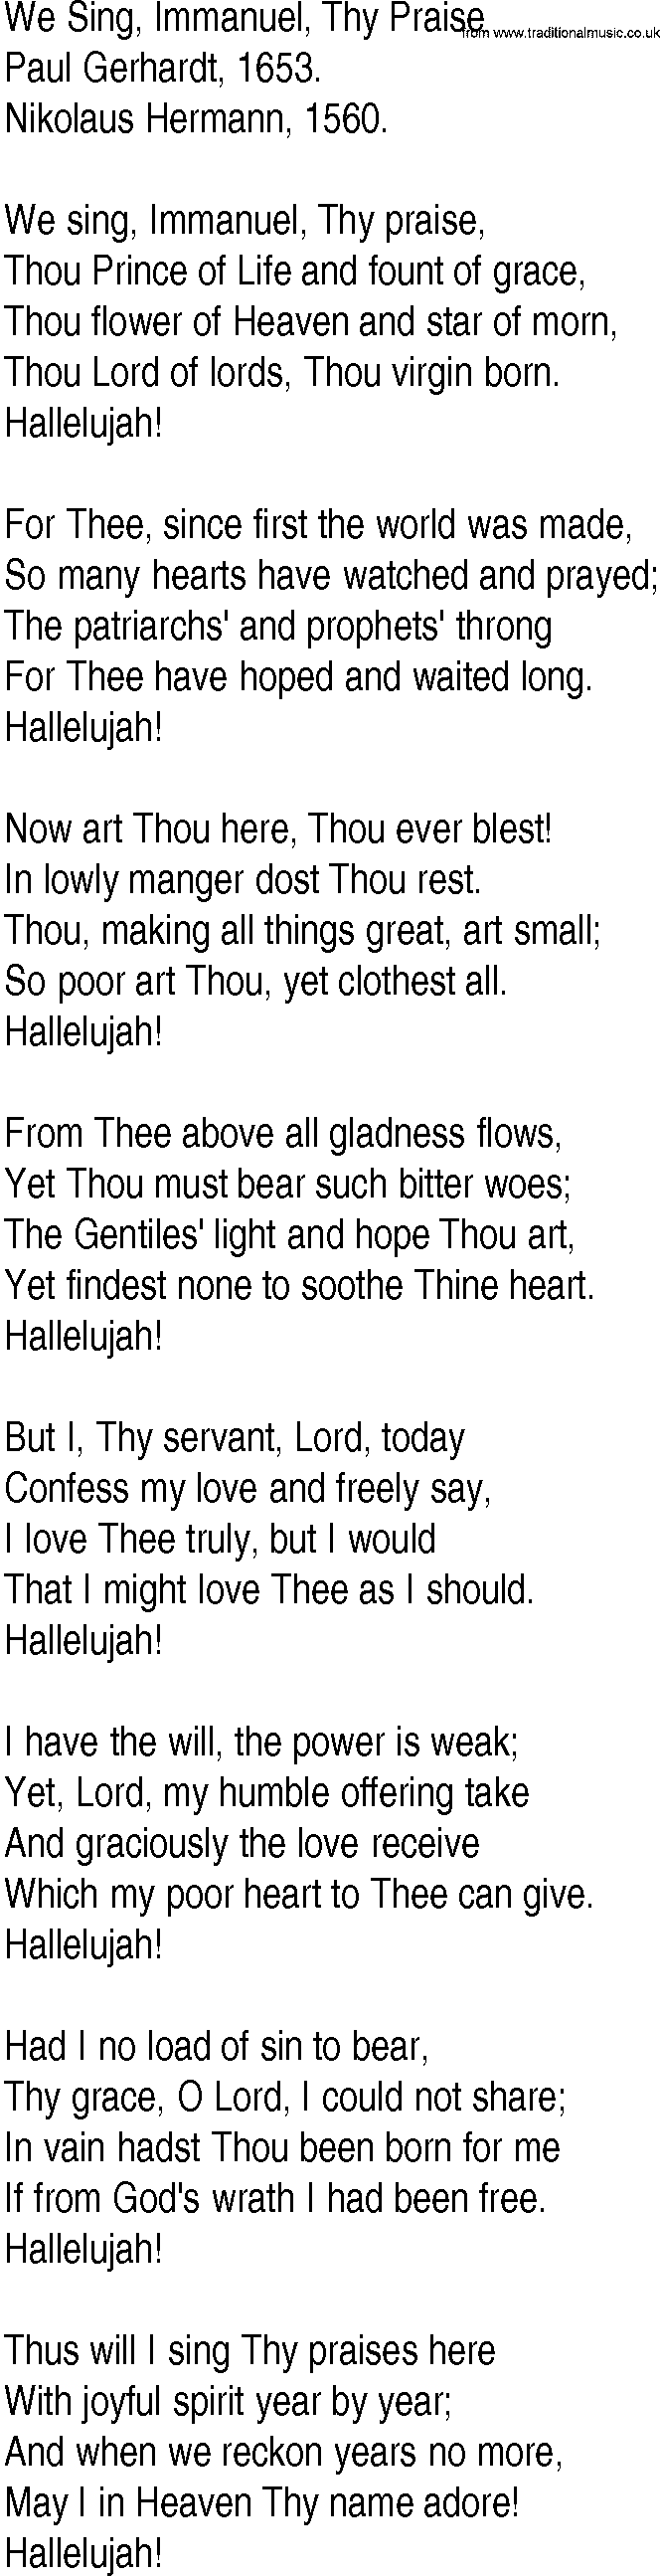 Hymn and Gospel Song: We Sing, Immanuel, Thy Praise by Paul Gerhardt lyrics